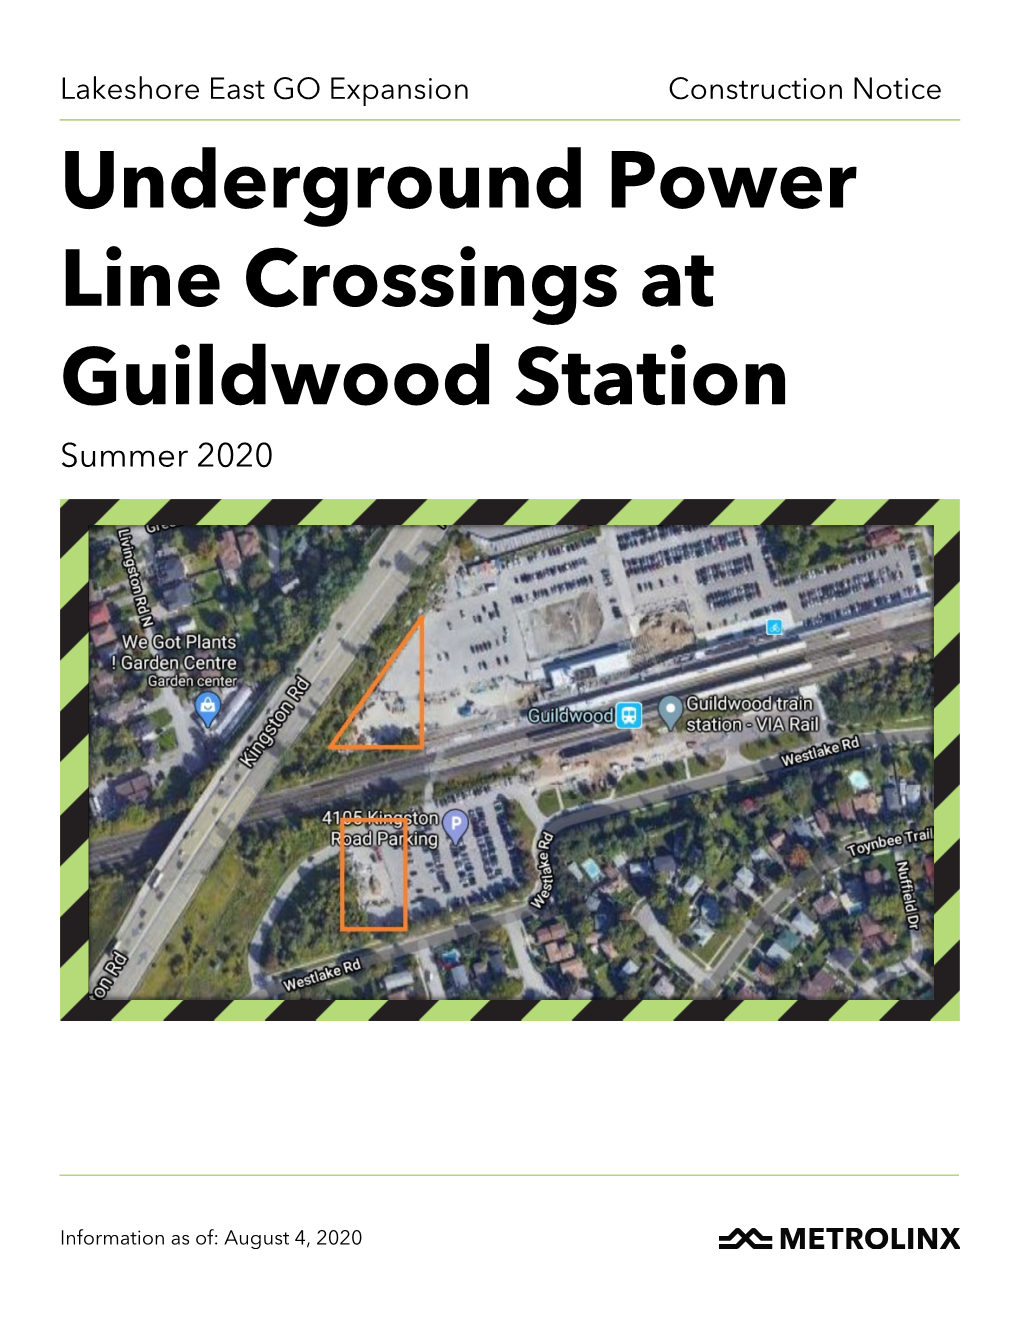 Underground Power Line Crossings at Guildwood Station Summer 2020